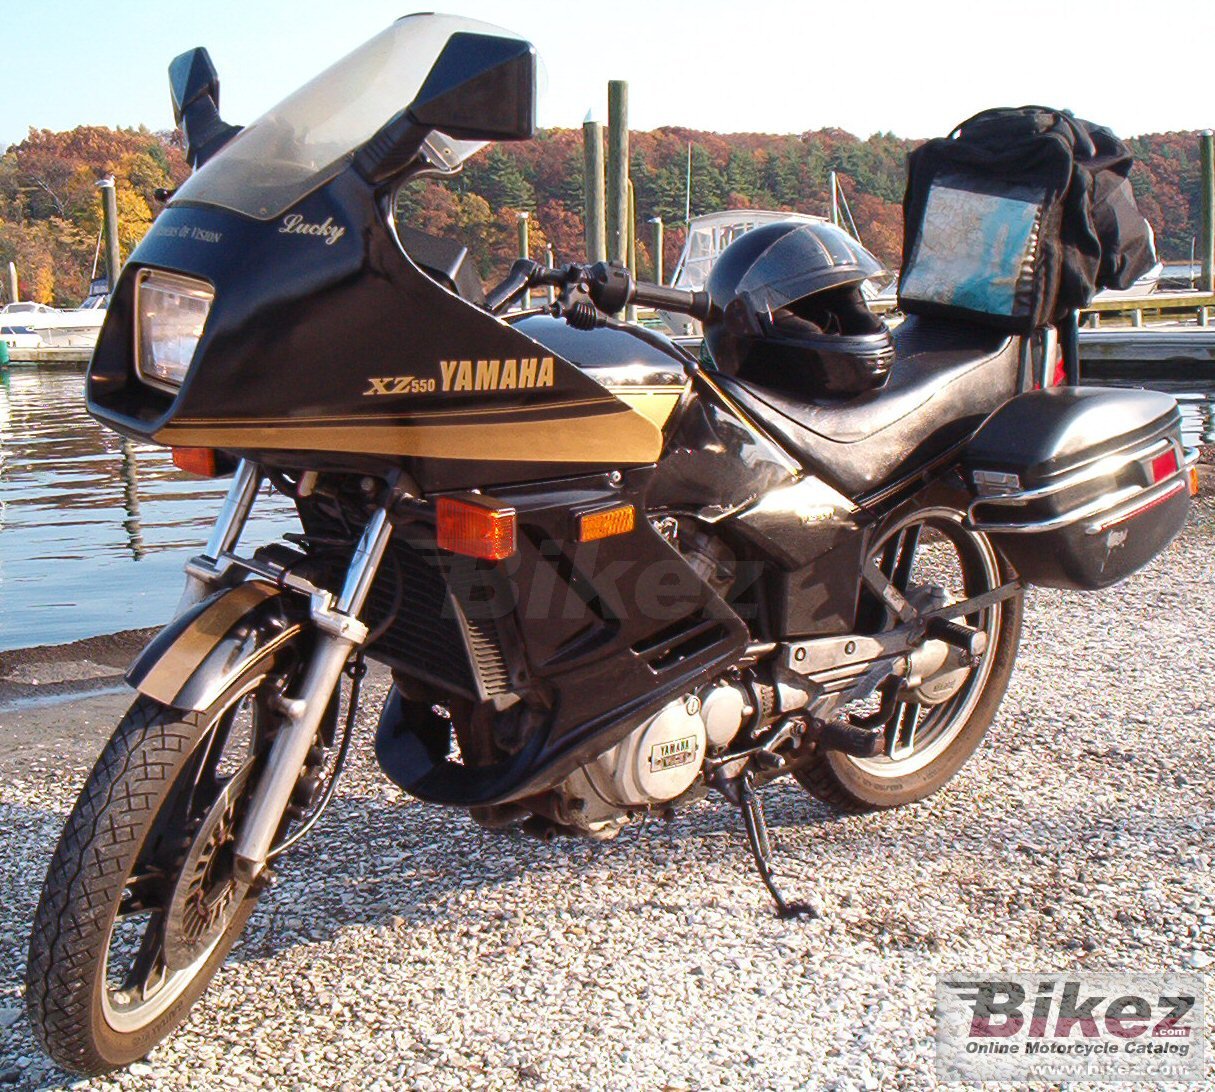 Yamaha XZ 550 S